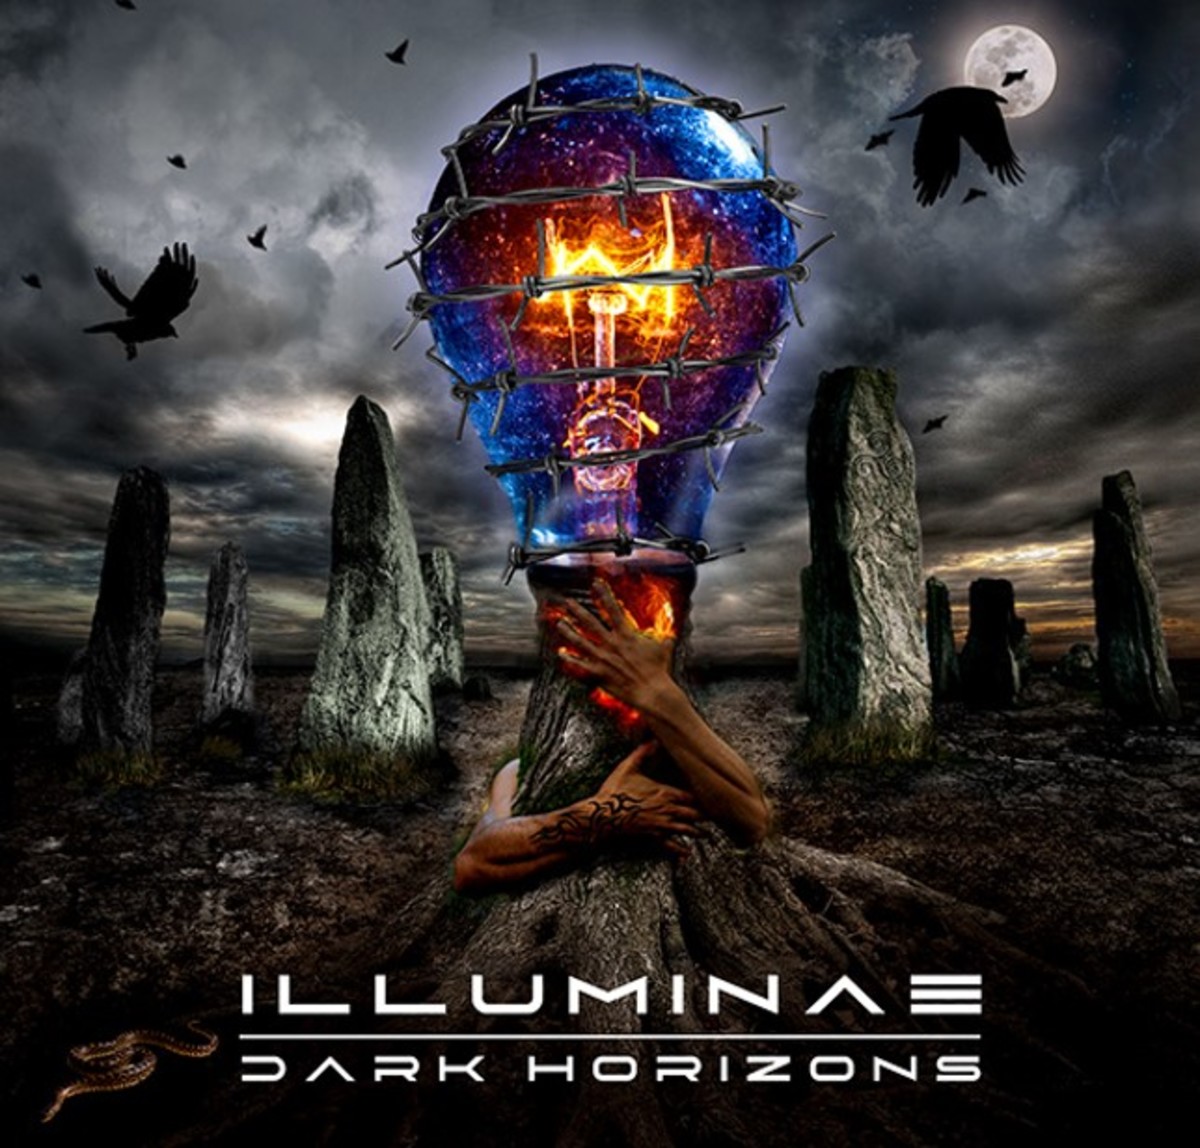 Illuminae CD cover